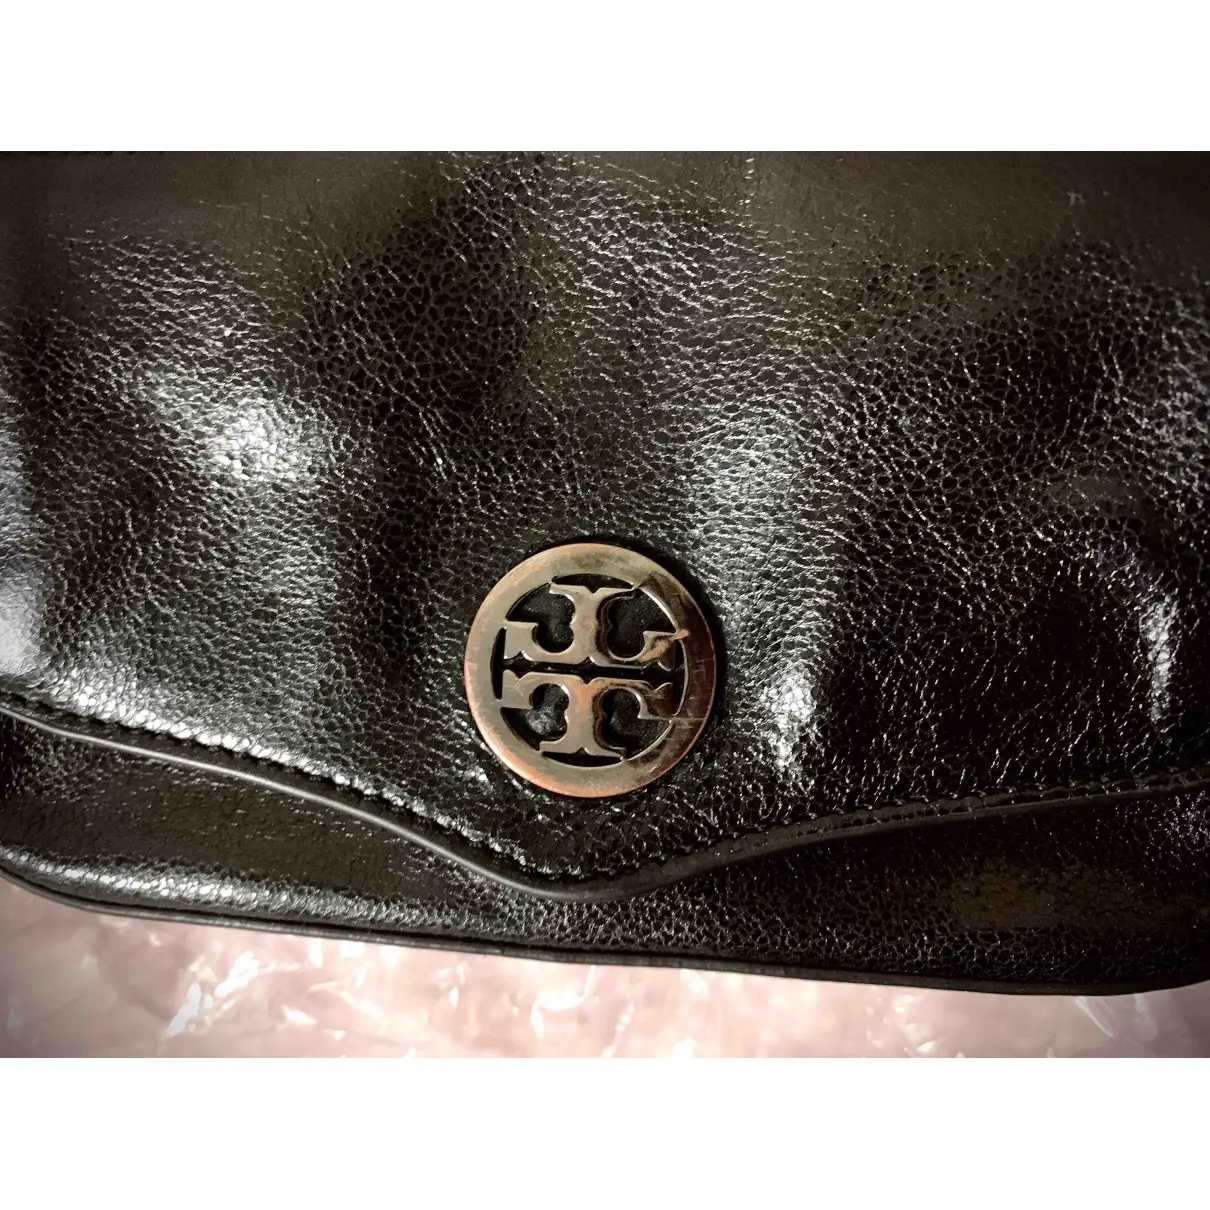 Leather handbag Tory Burch